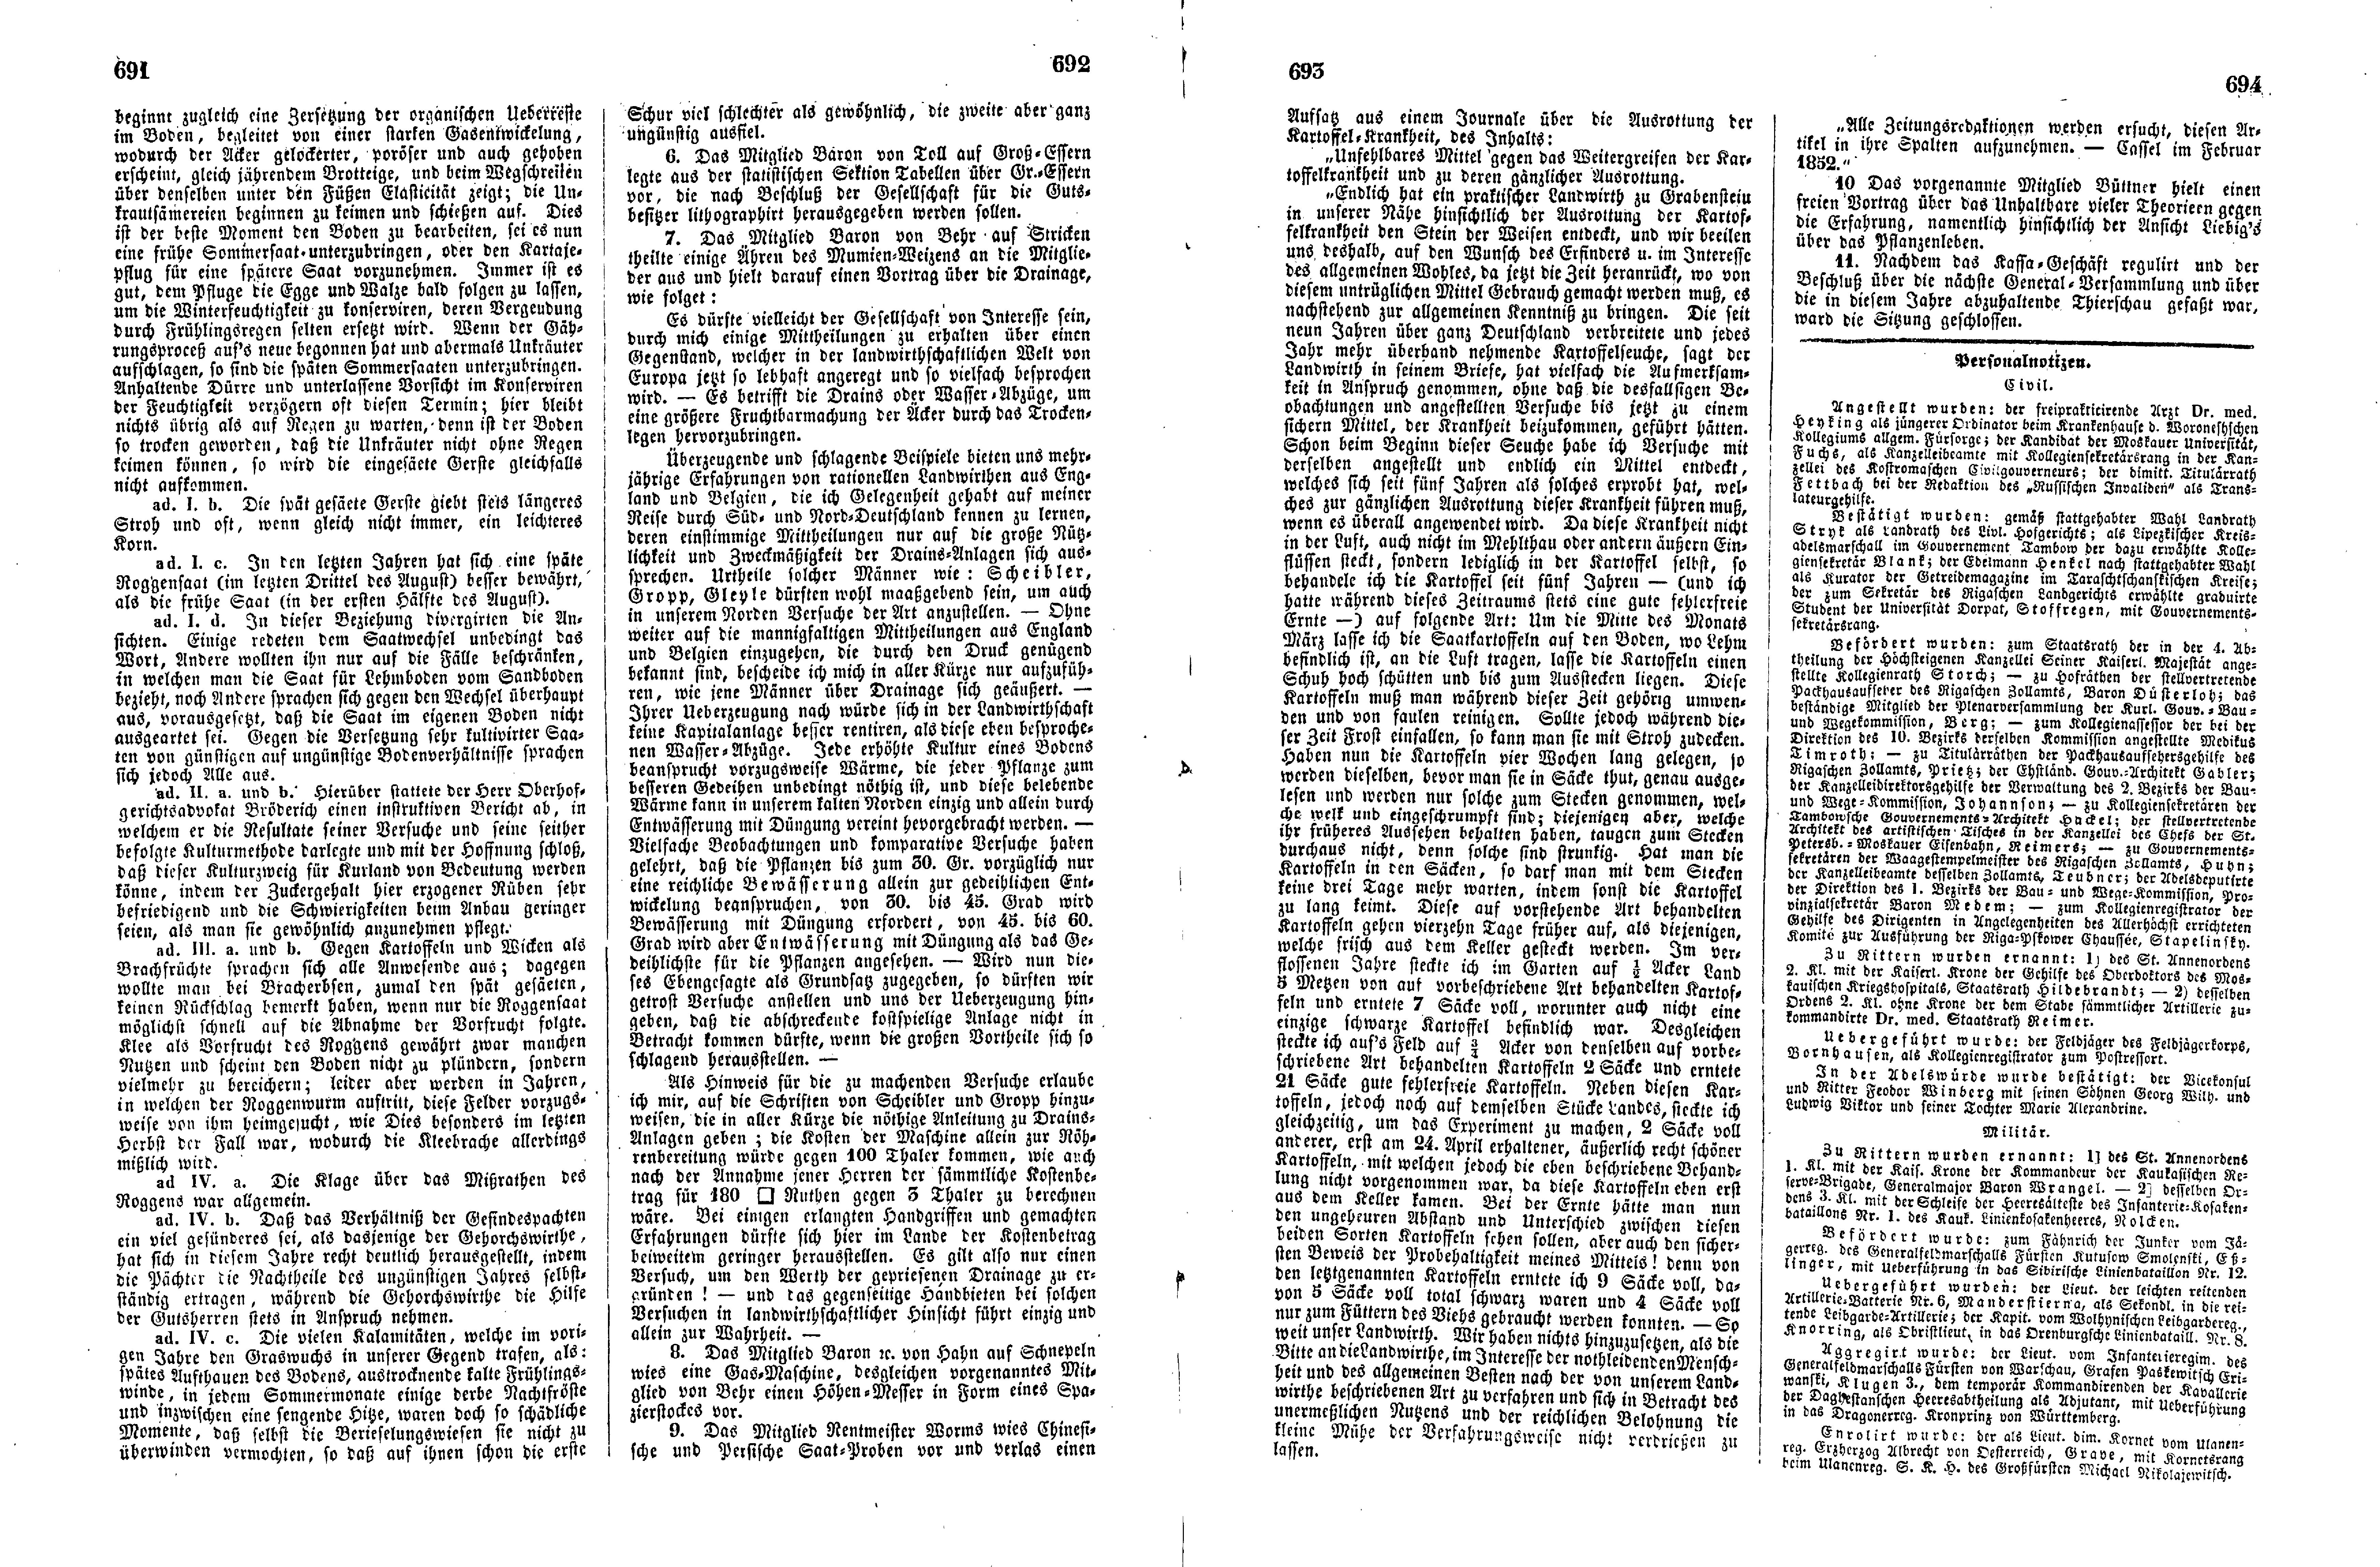 Das Inland [17] (1852) | 178. (691-694) Main body of text